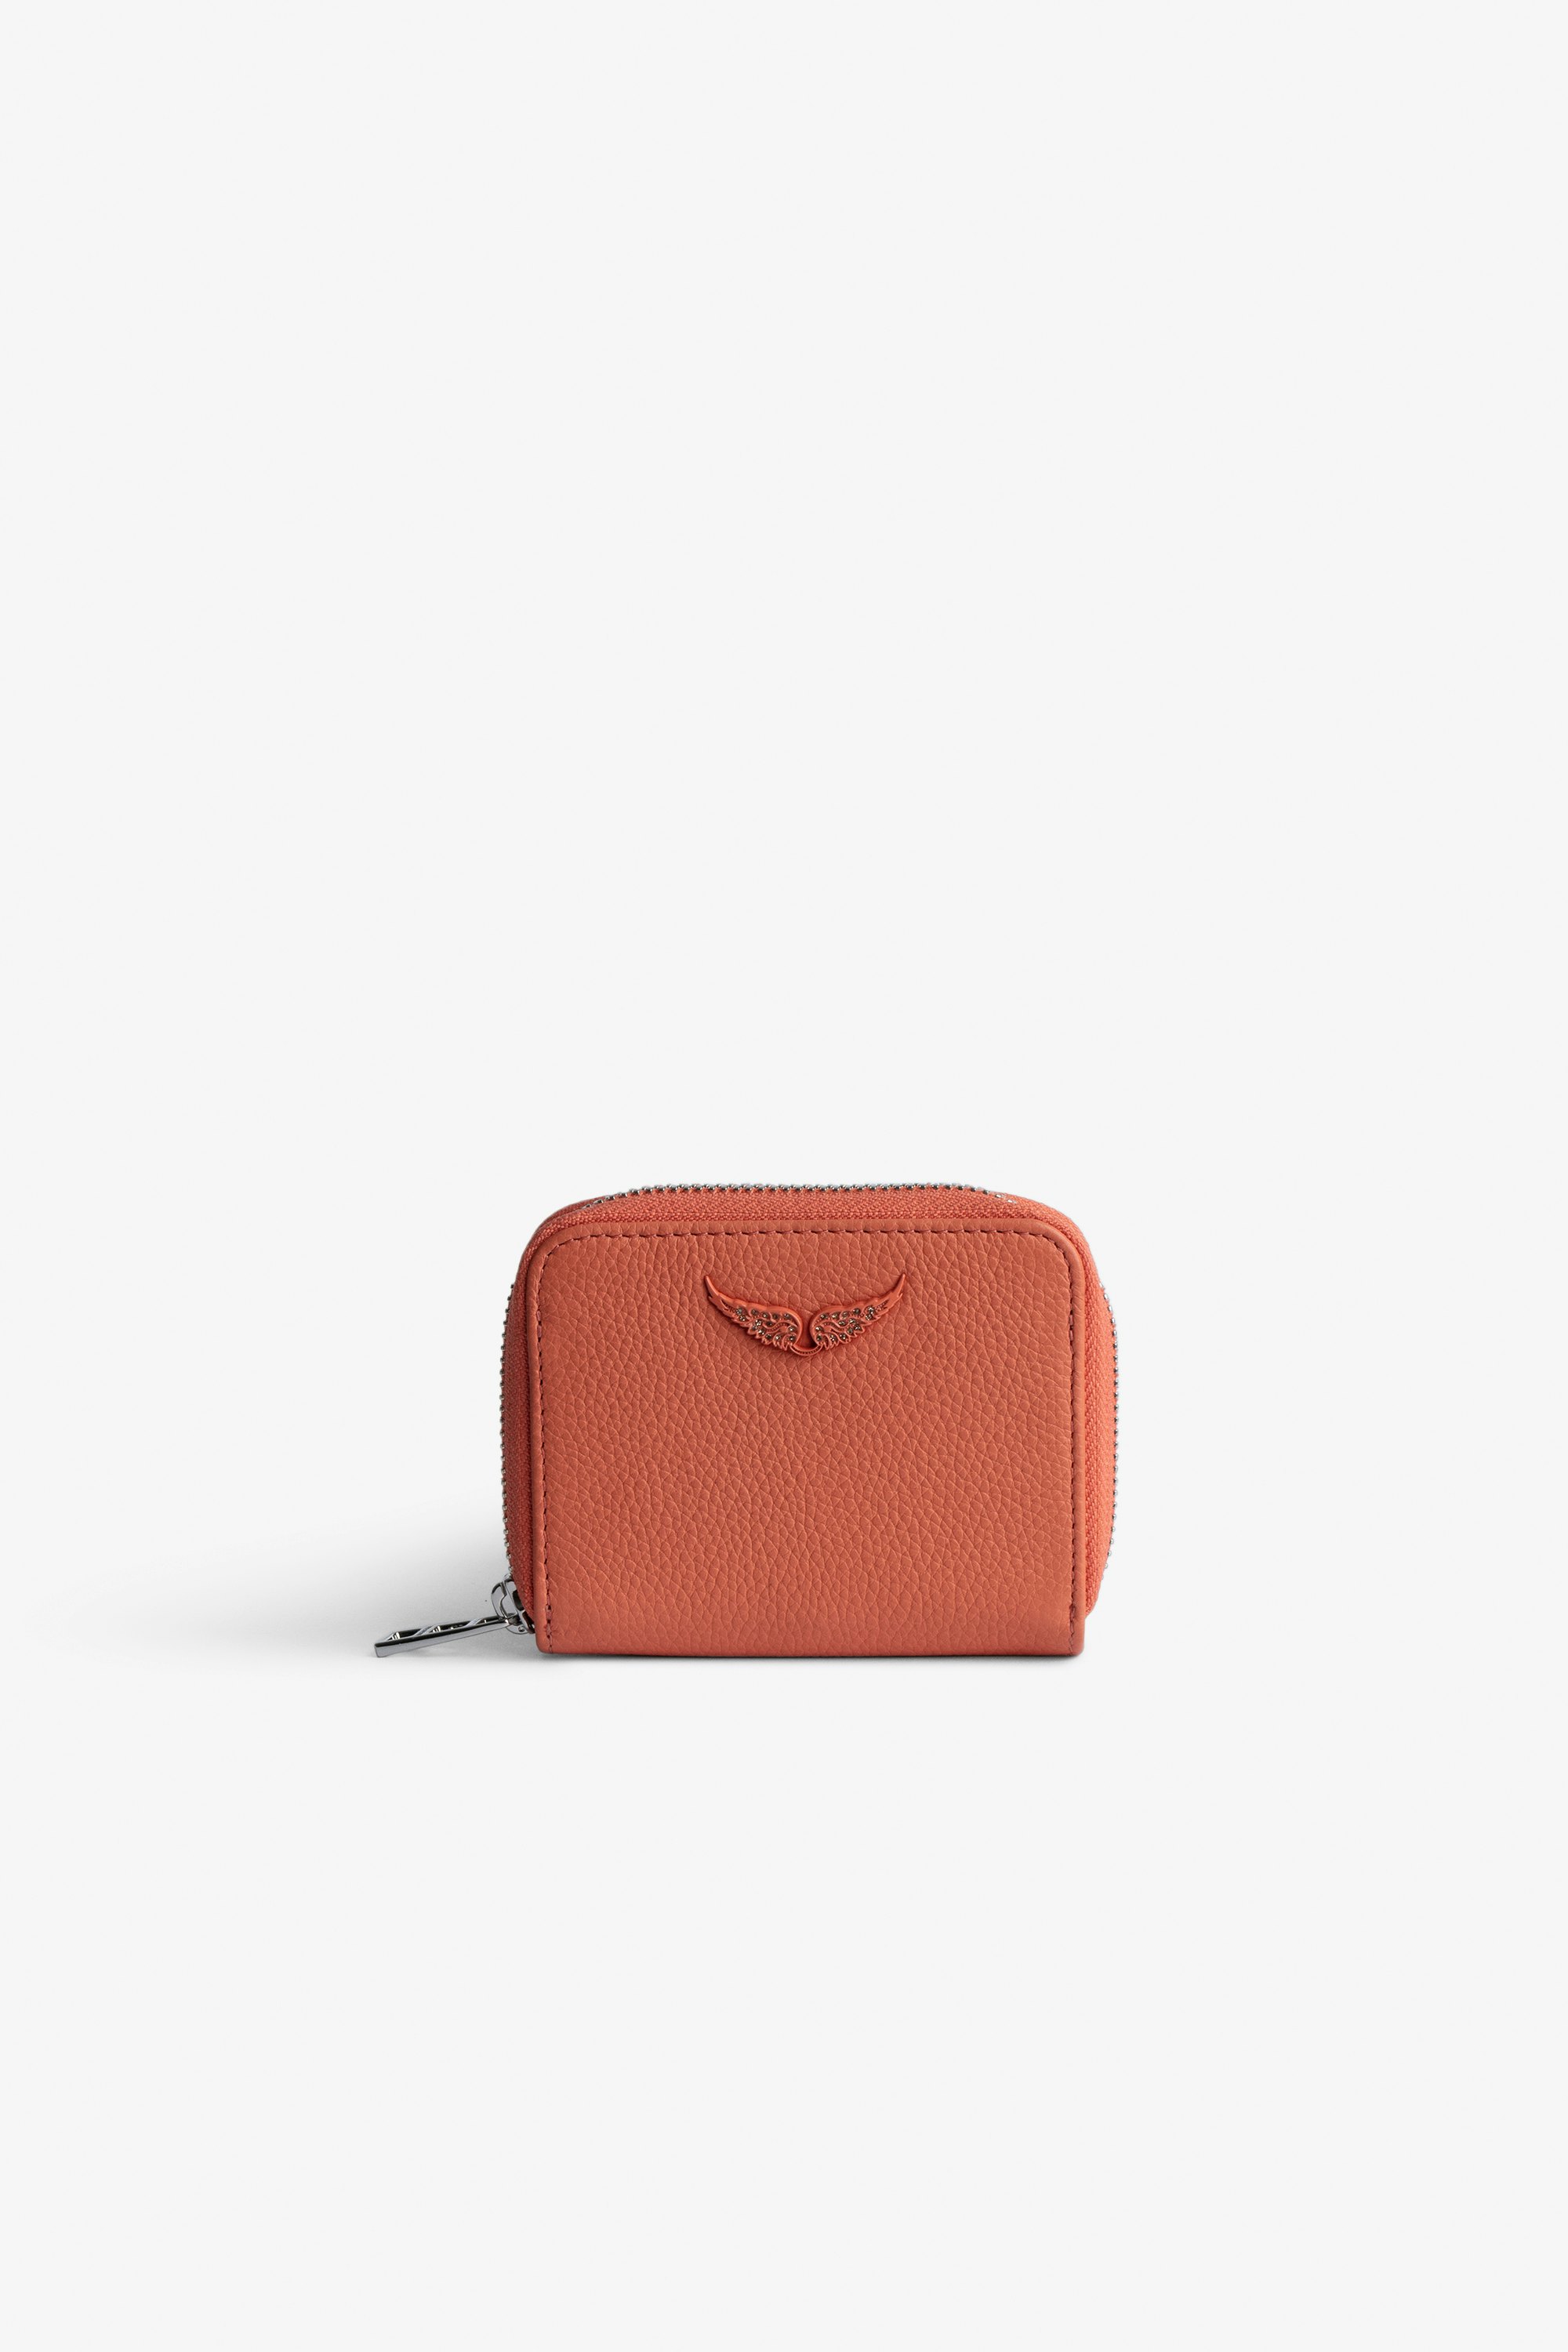 Mini ZV Coin Purse Women's wallet in orange grained leather